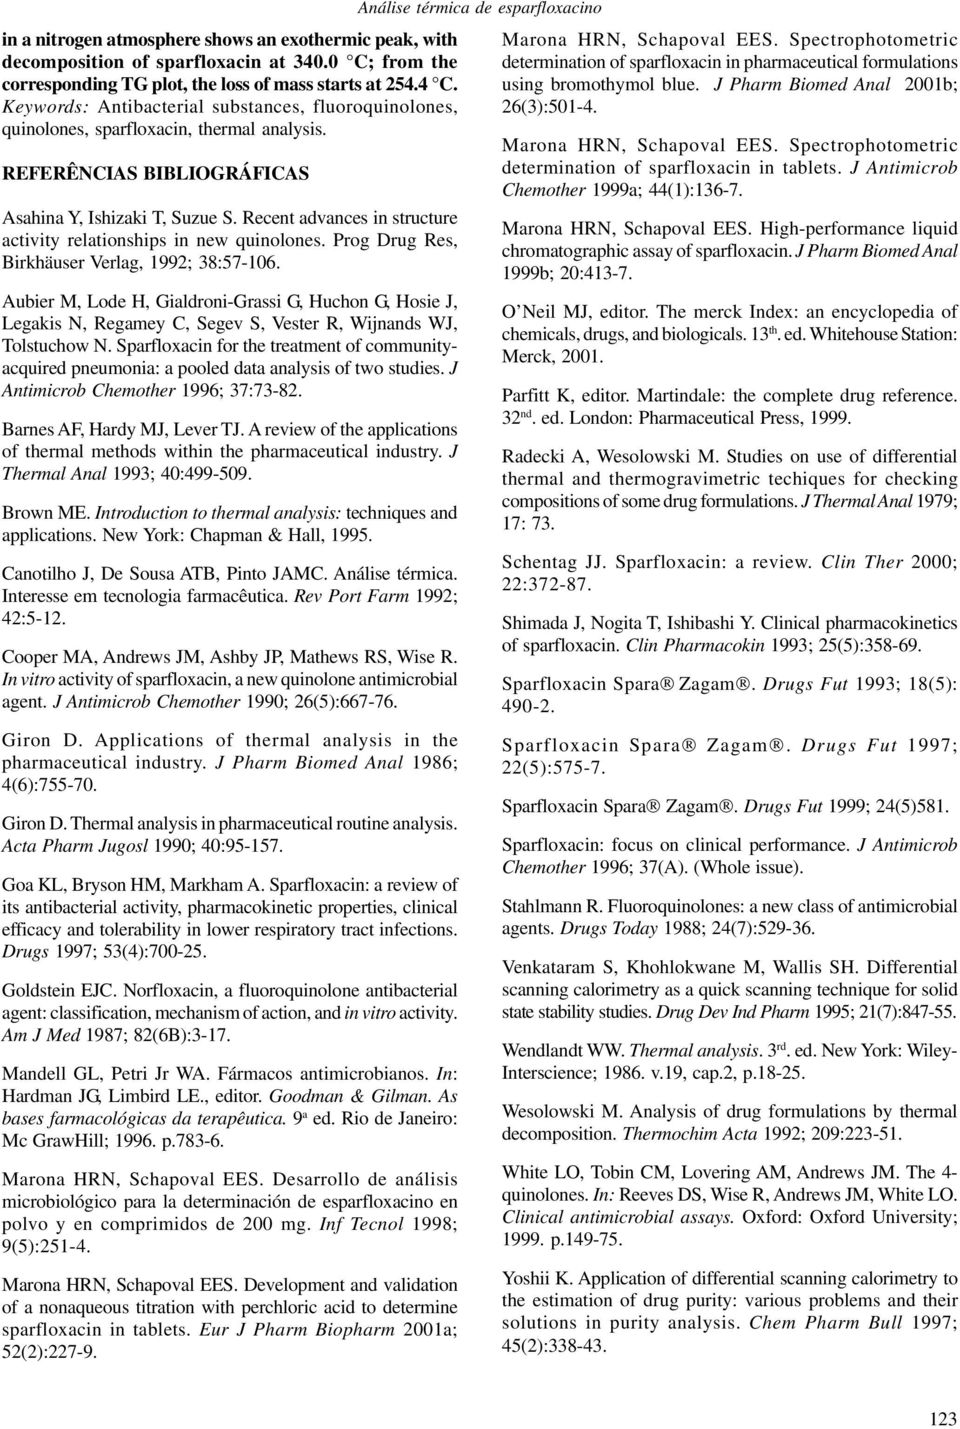 Recent advances in structure activity relationships in new quinolones. Prog Drug Res, Birkhäuser Verlag, 1992; 38:57-106.